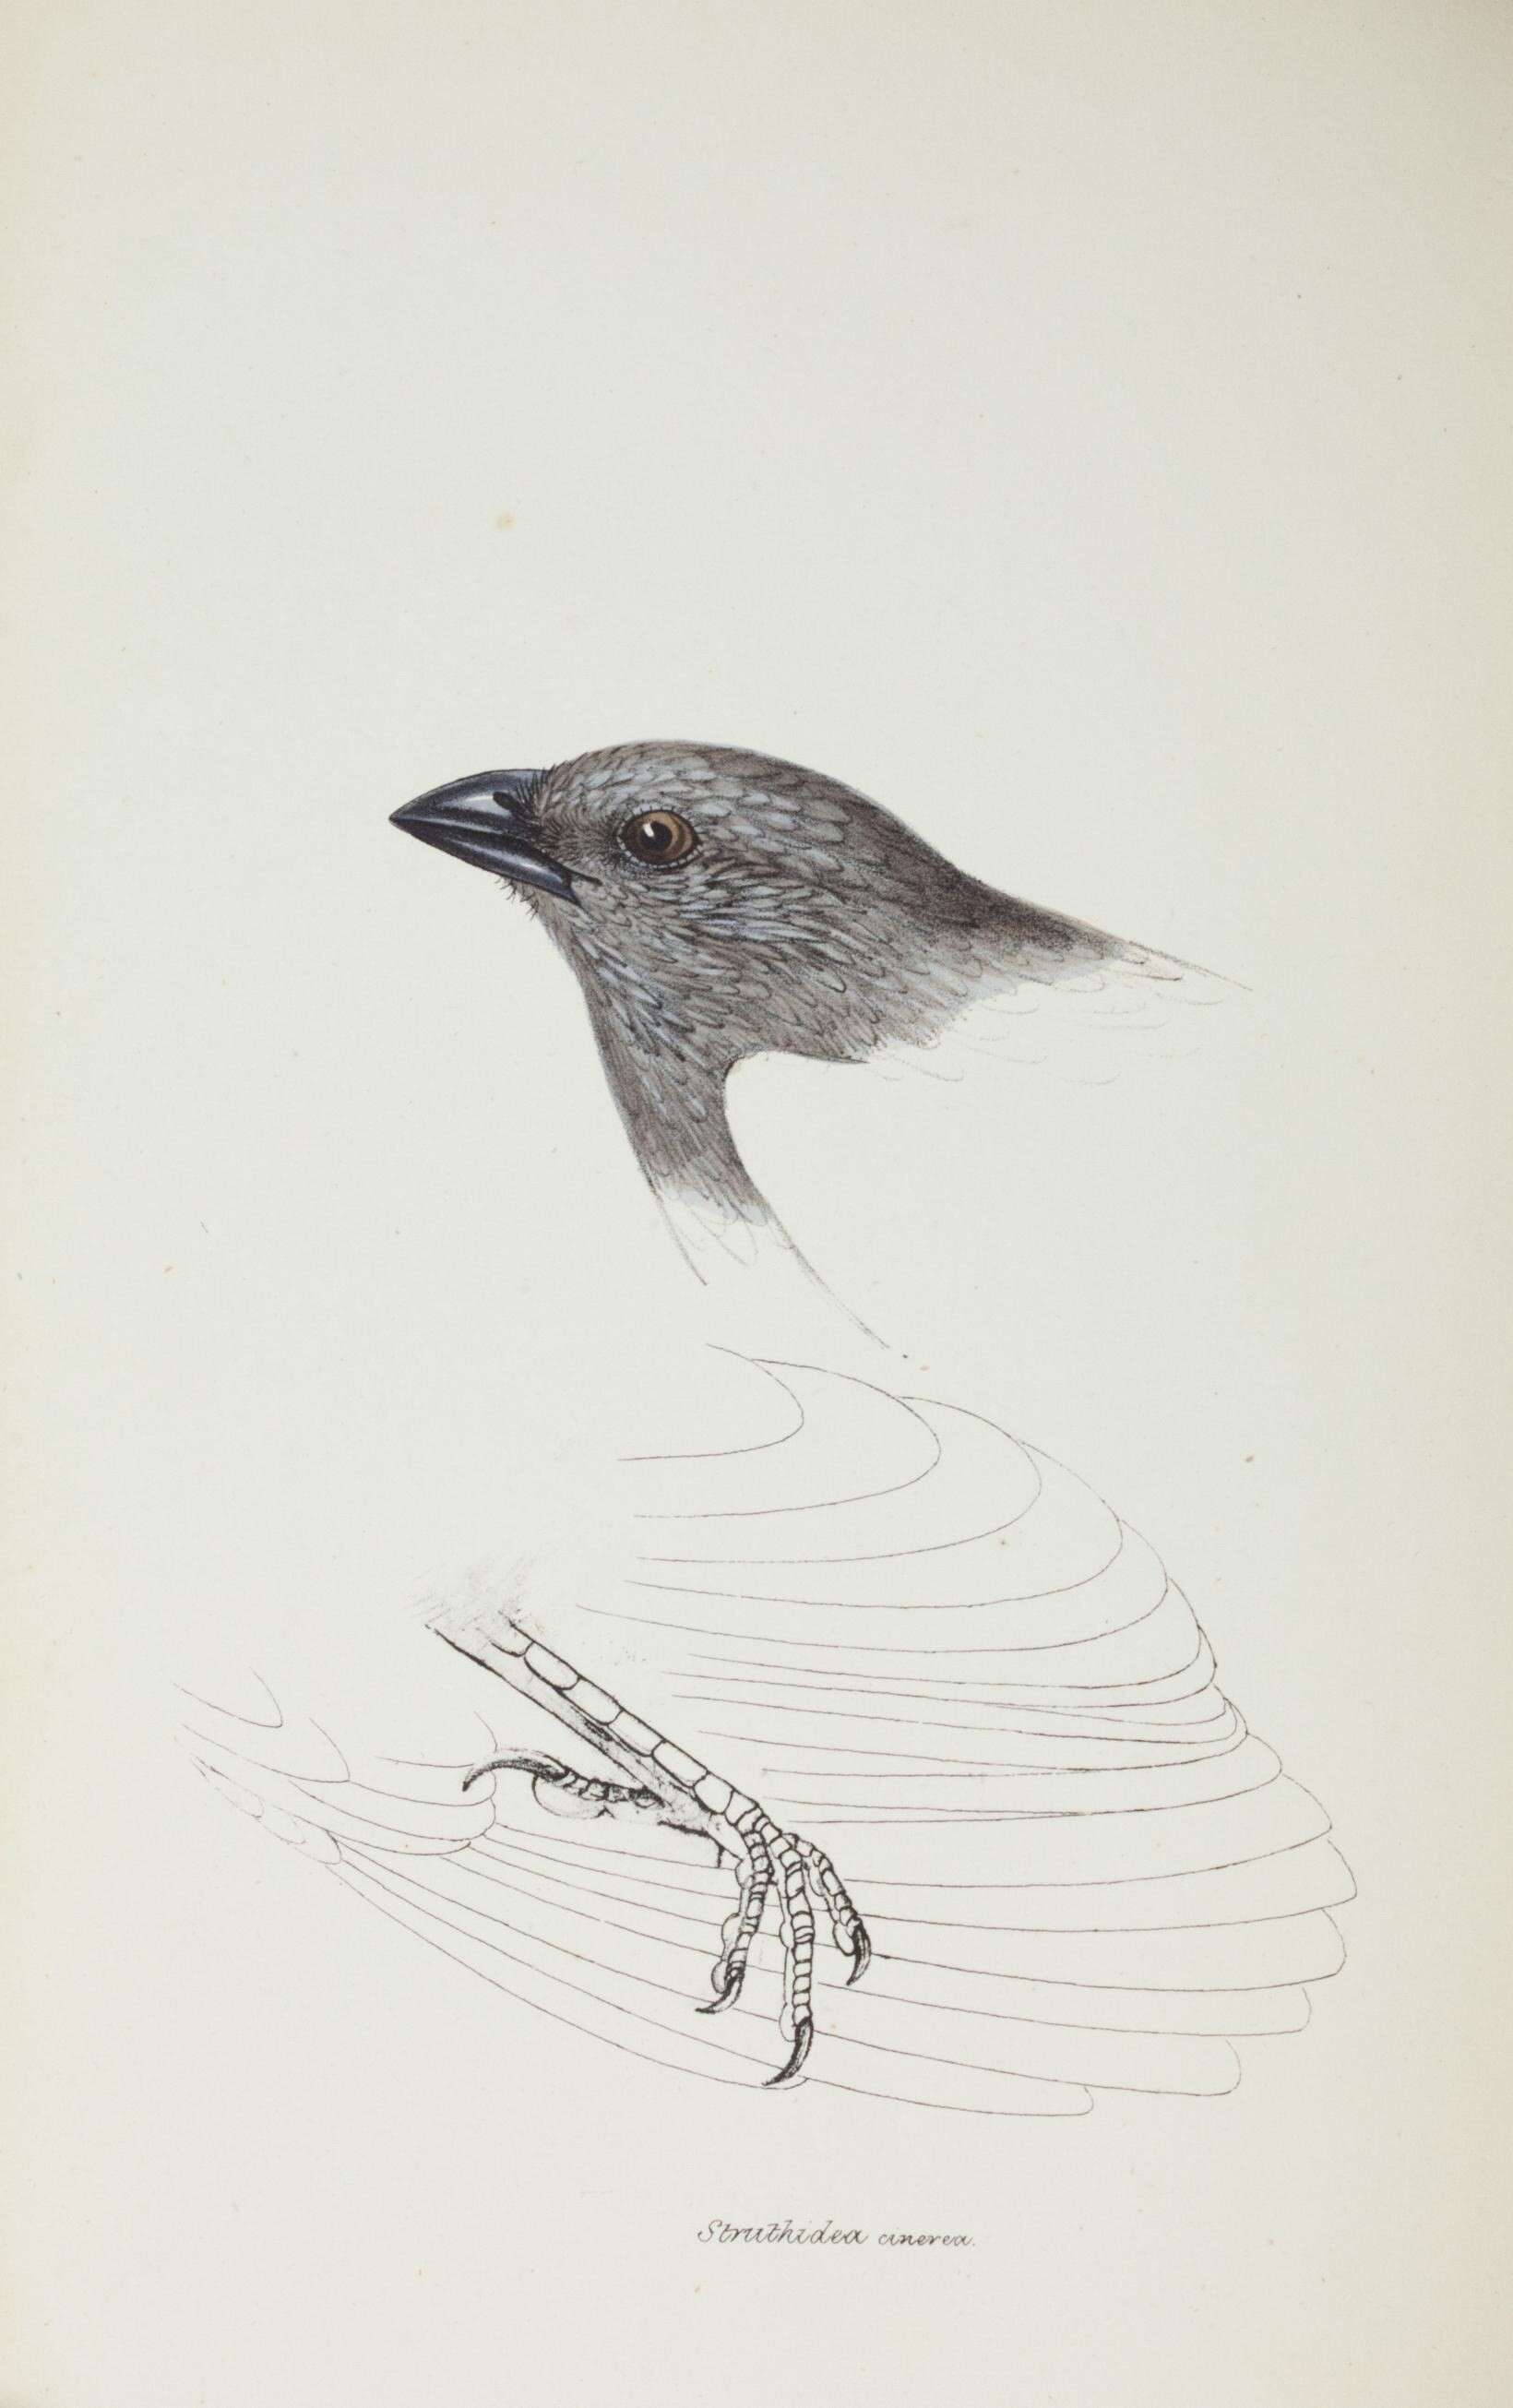 Image of Struthidea Gould 1837